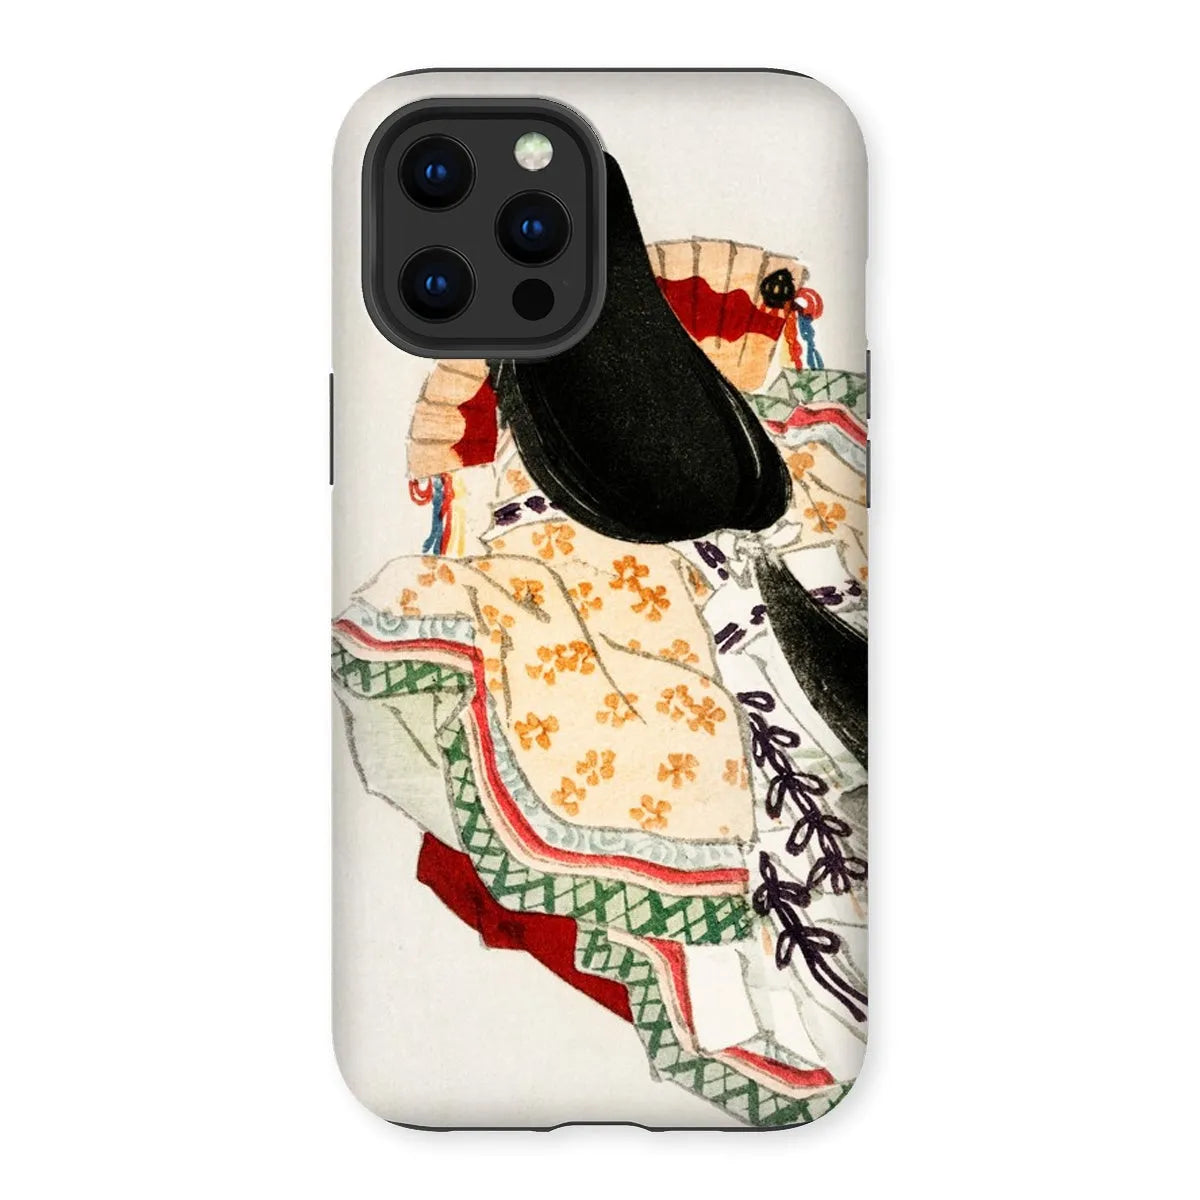 Lady In a Kimono - Meiji Art Phone Case - Kōno Bairei - Iphone 12 Pro Max / Matte - Mobile Phone Cases - Aesthetic Art